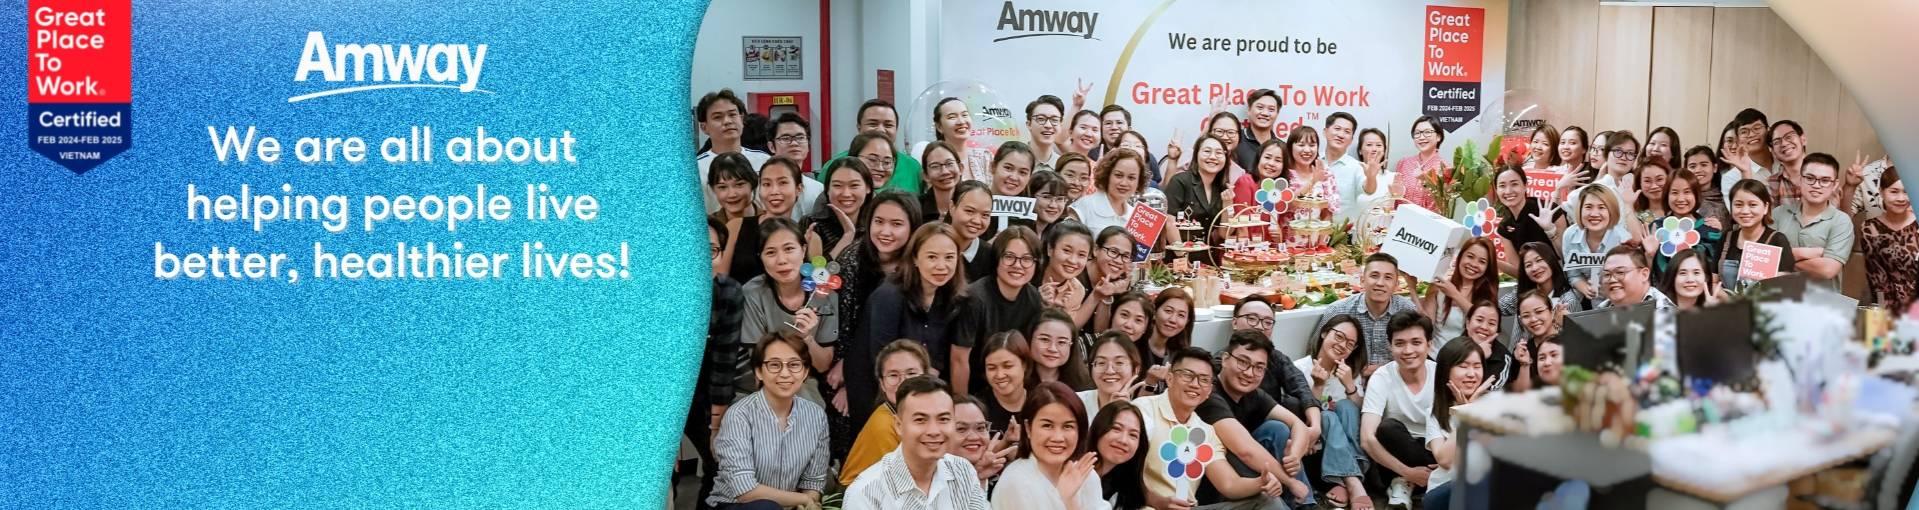 Amway Vietnam Co., Ltd.